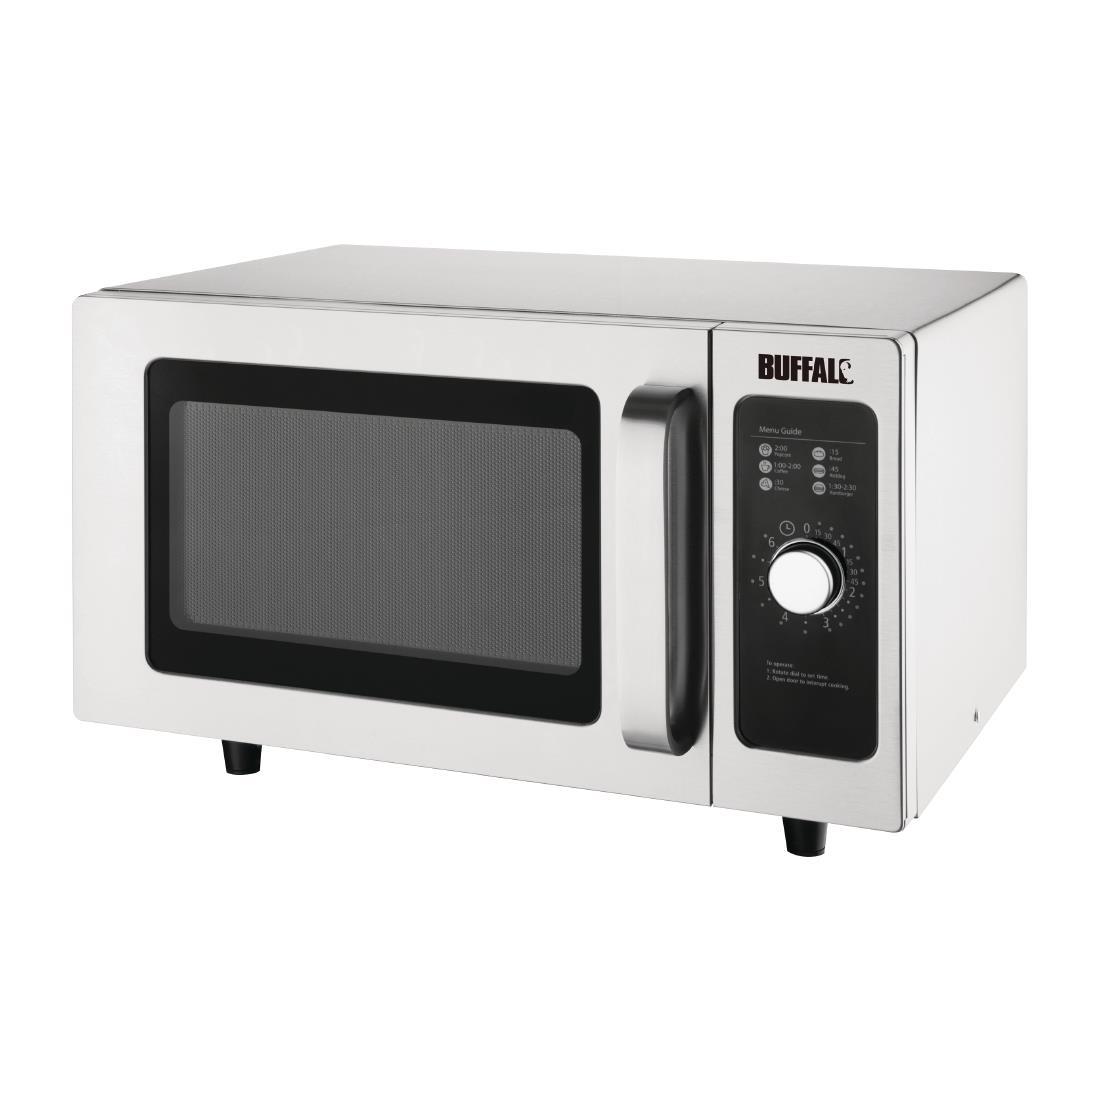 Buffalo Manual Commercial Microwave 25ltr 1000W - FB861  - 1